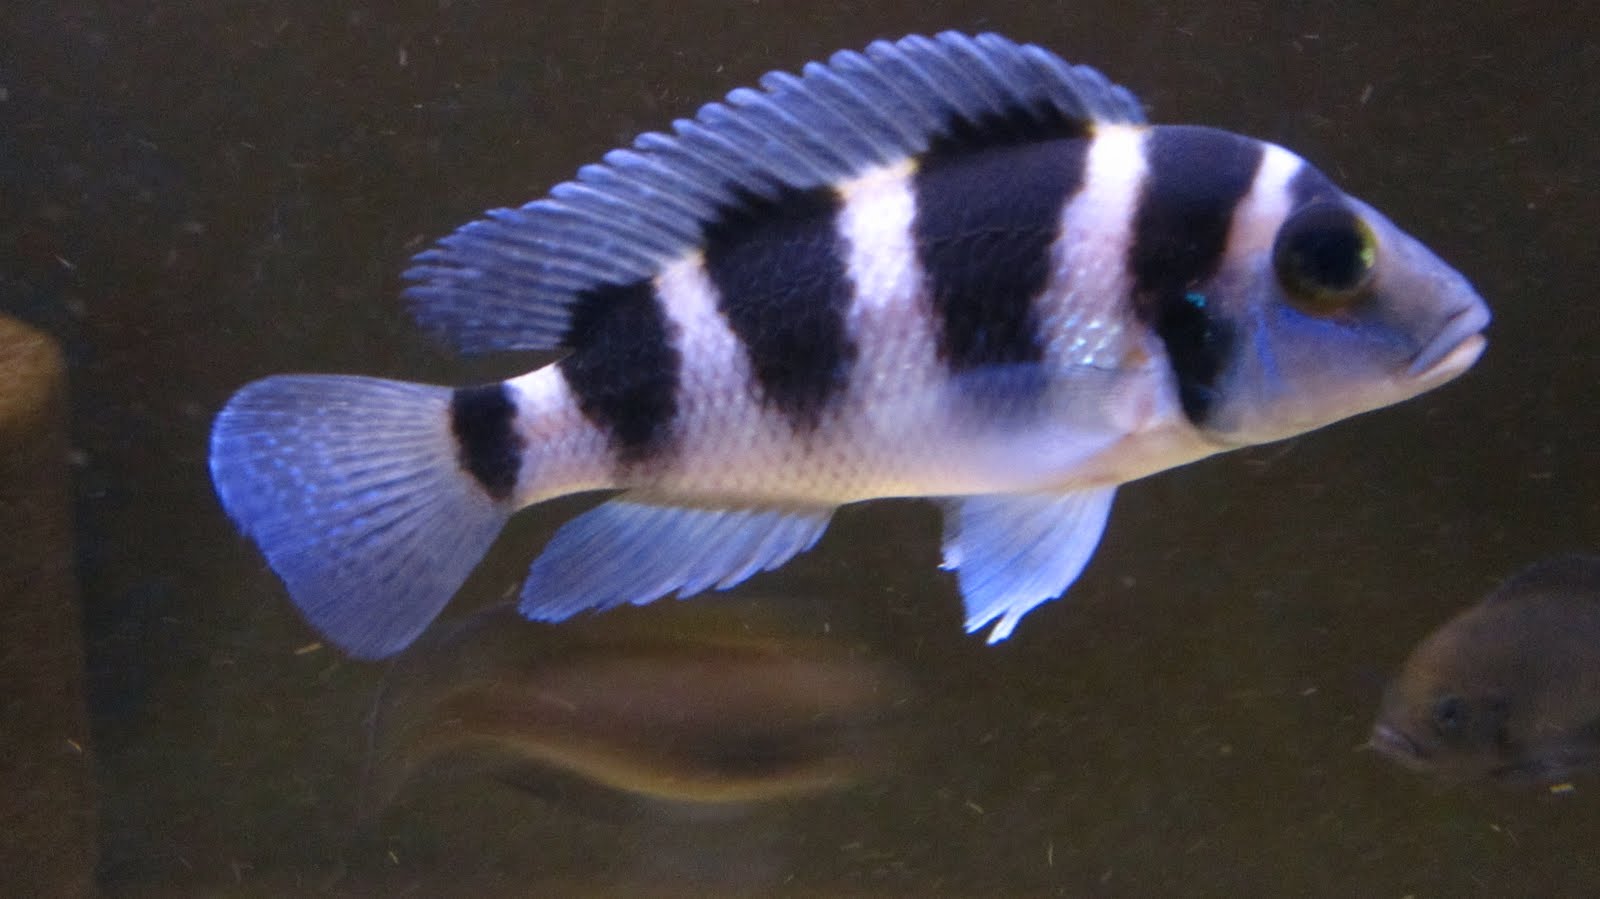 mal/tang fish: Neolamprologus tretocephalus